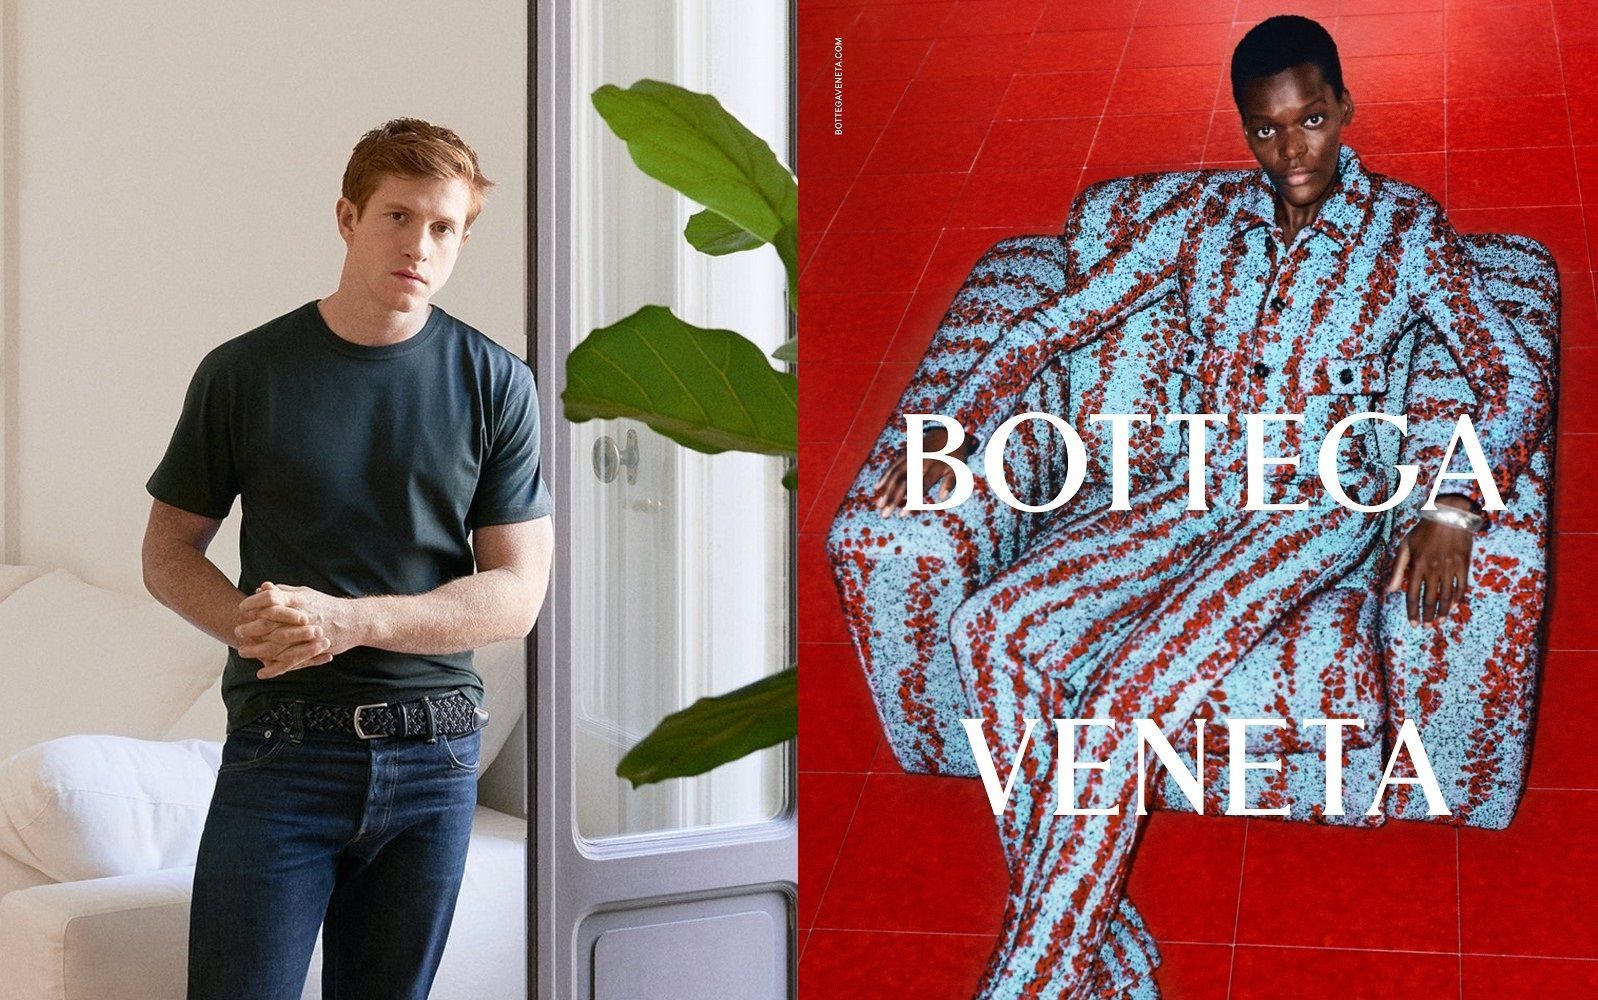 From The Pouch To The Cassette, Daniel Lee's Greatest Bottega Veneta Hits